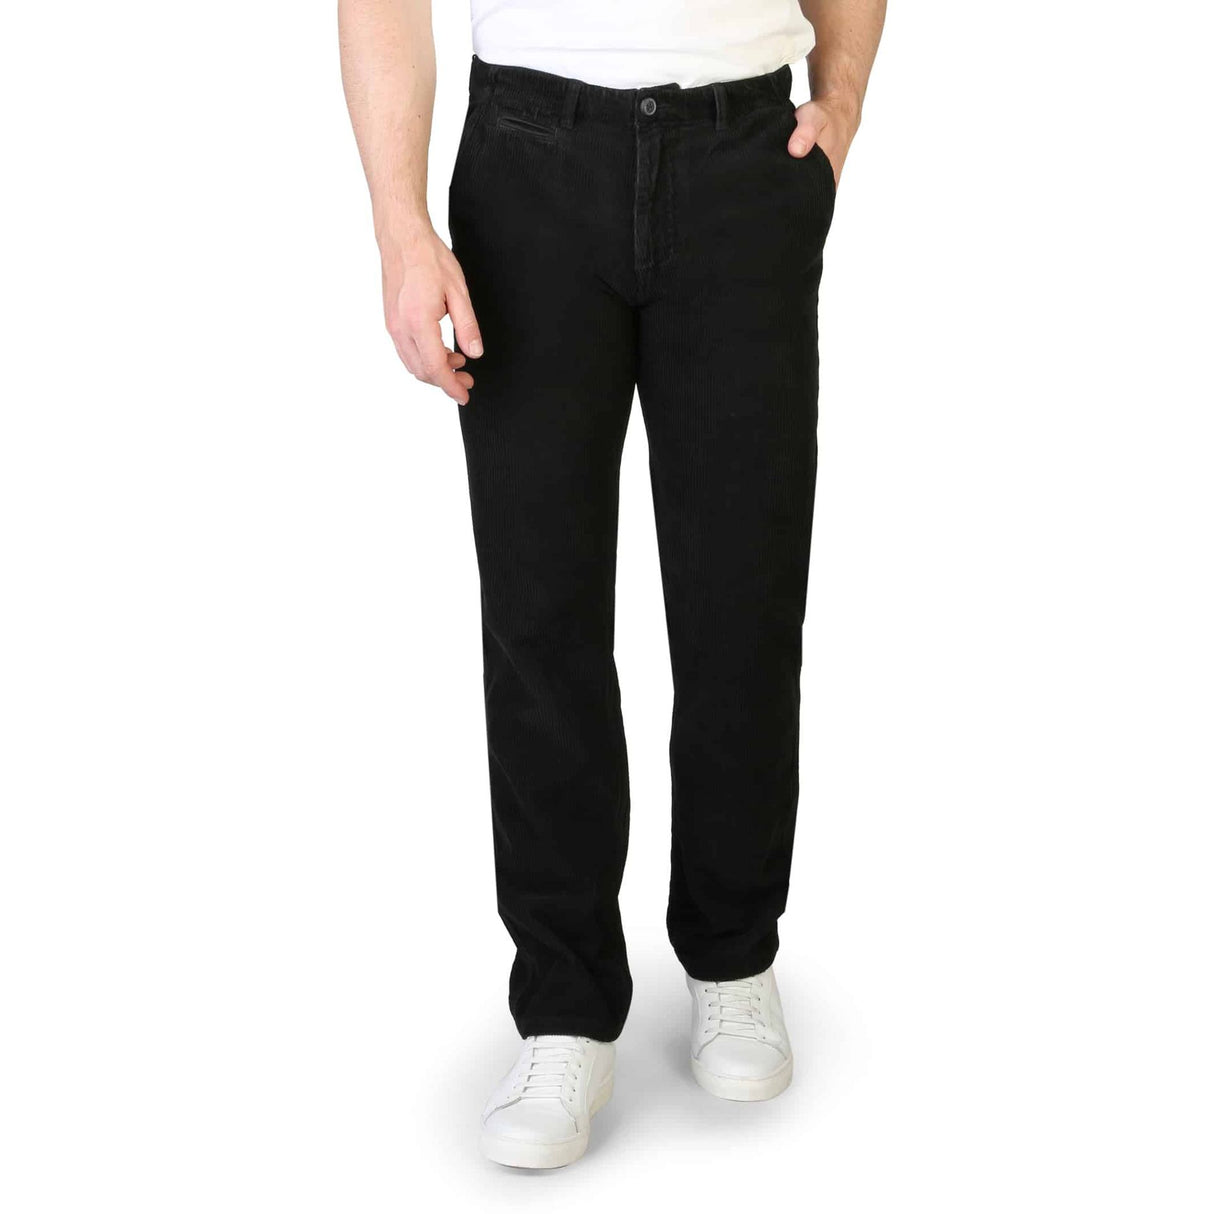 Men's pants Men's trousers Men's dress pants Men's chinos Men's jeans Men's khakis Men's casual trousers Men's slim fit pants Men's formal trousers Men's cargo pants